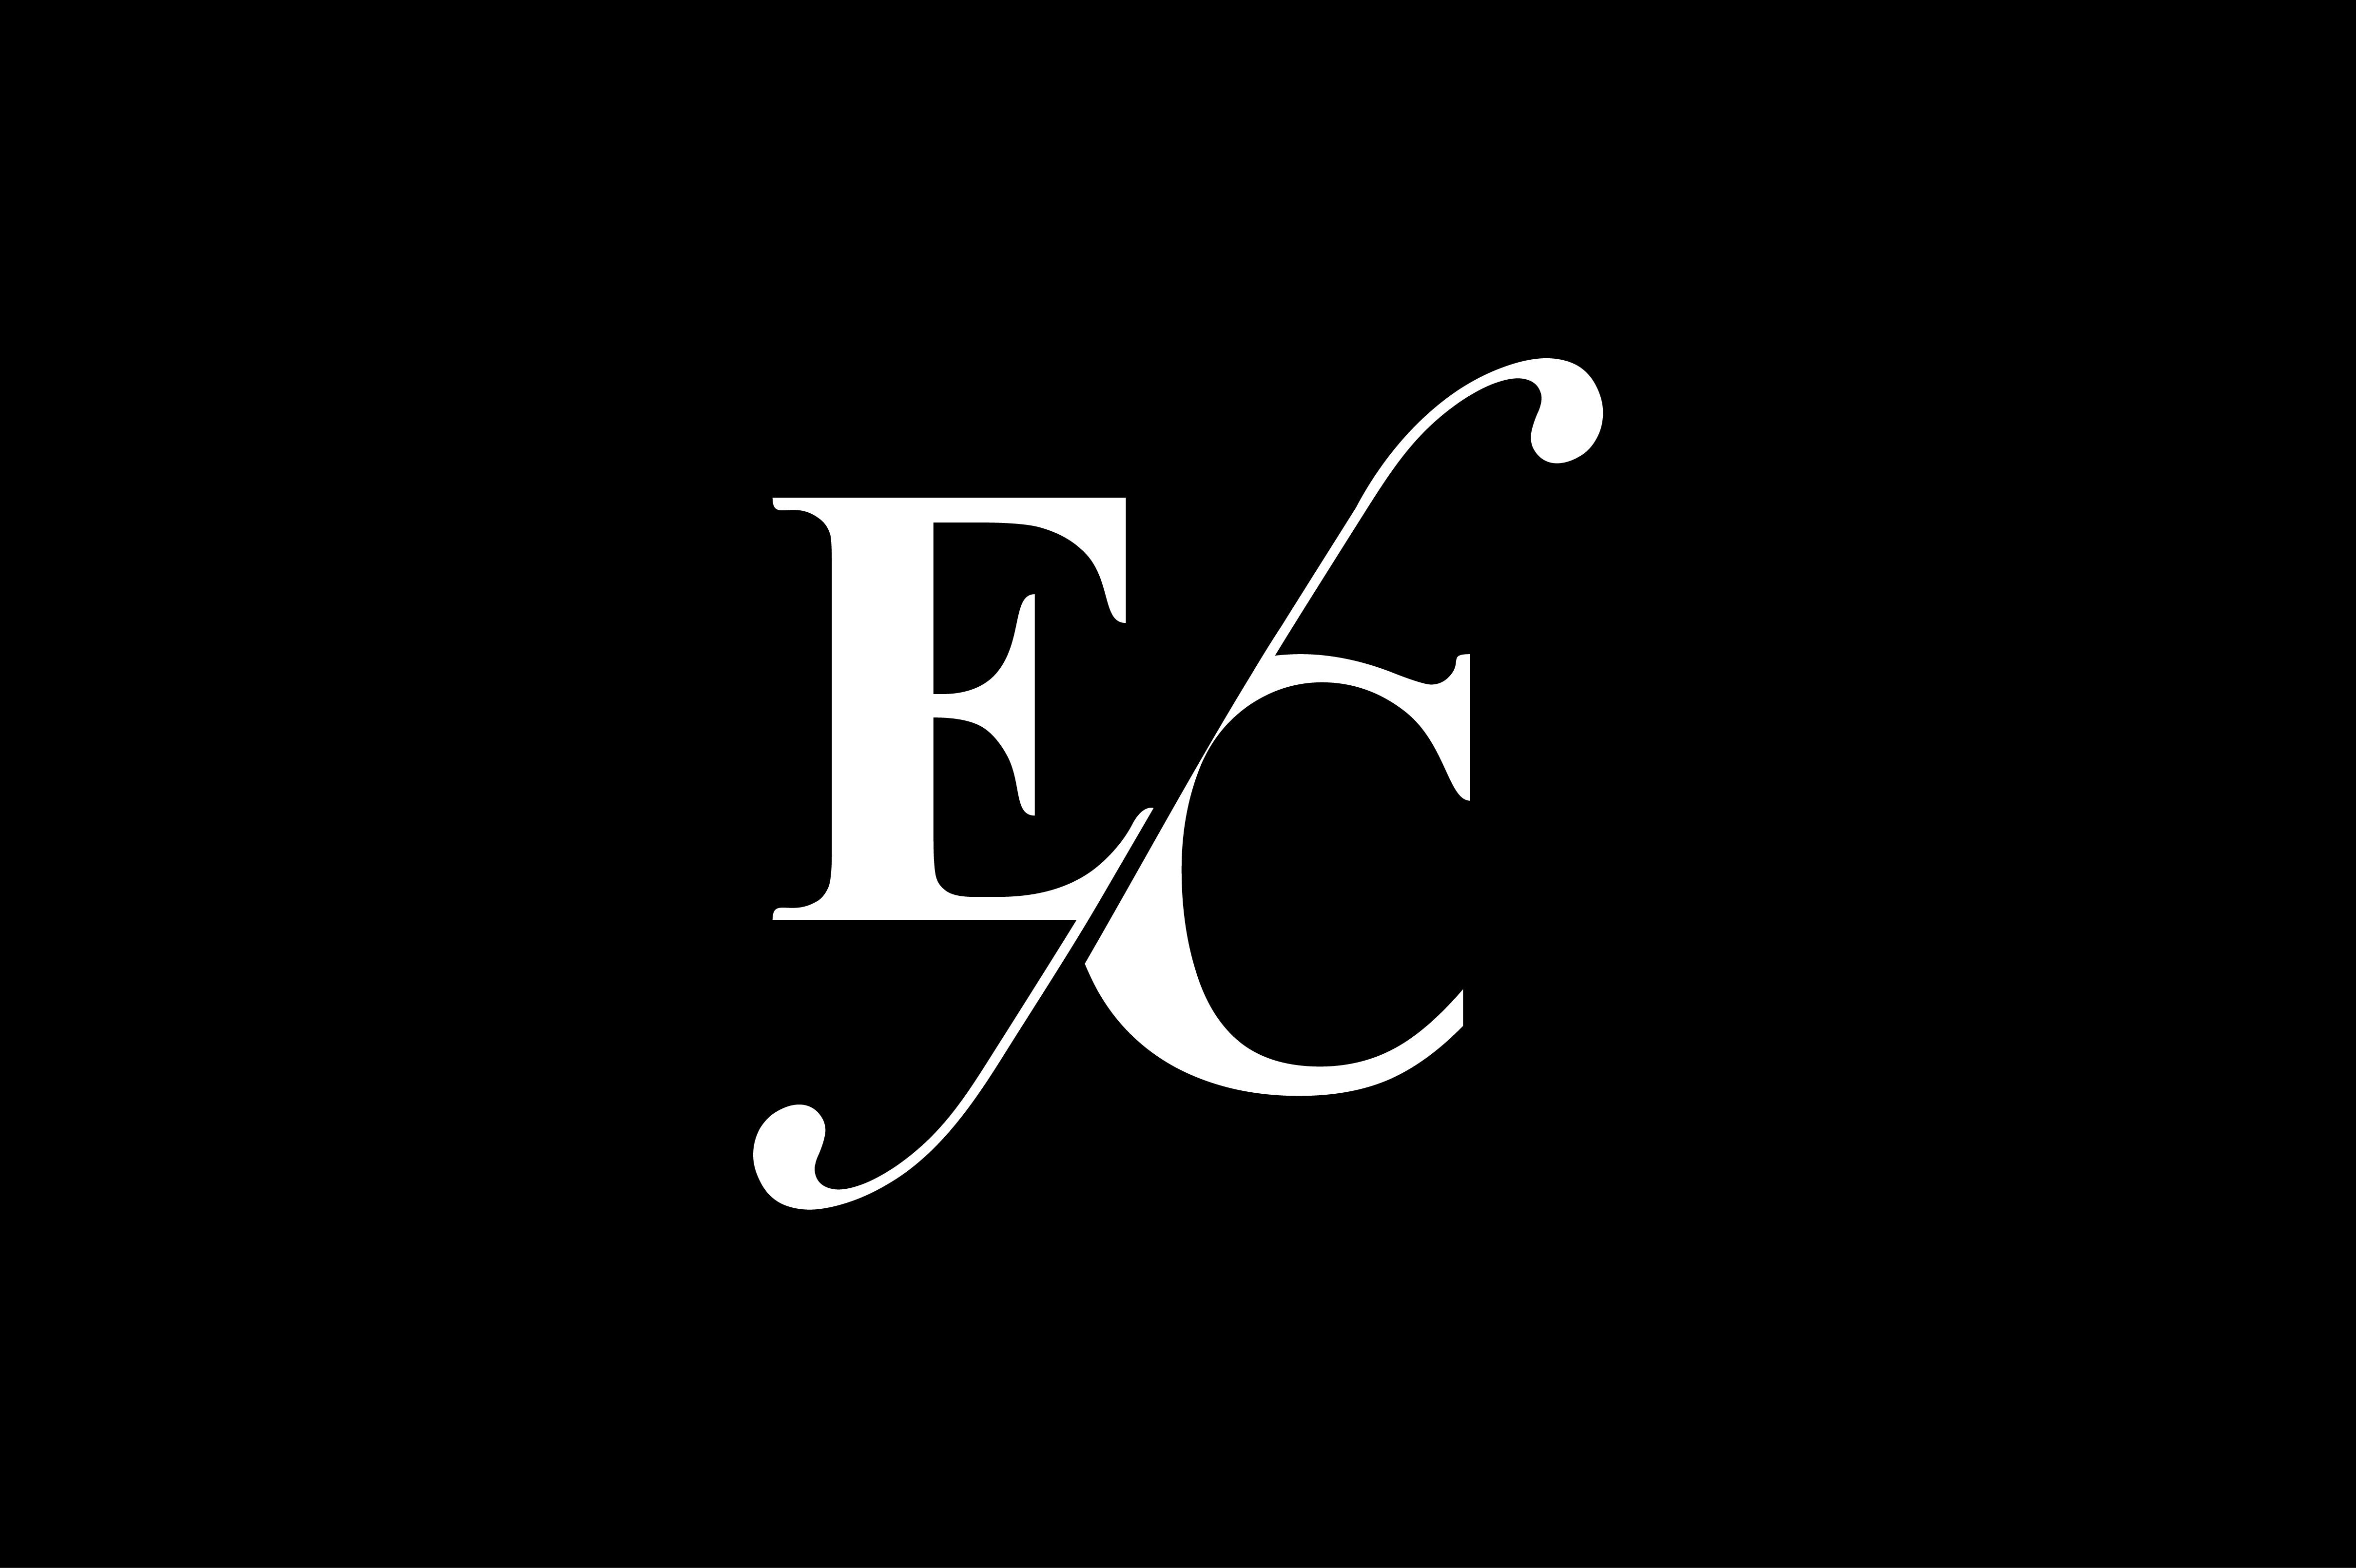 ec-monogram-logo-design-by-vectorseller-thehungryjpeg